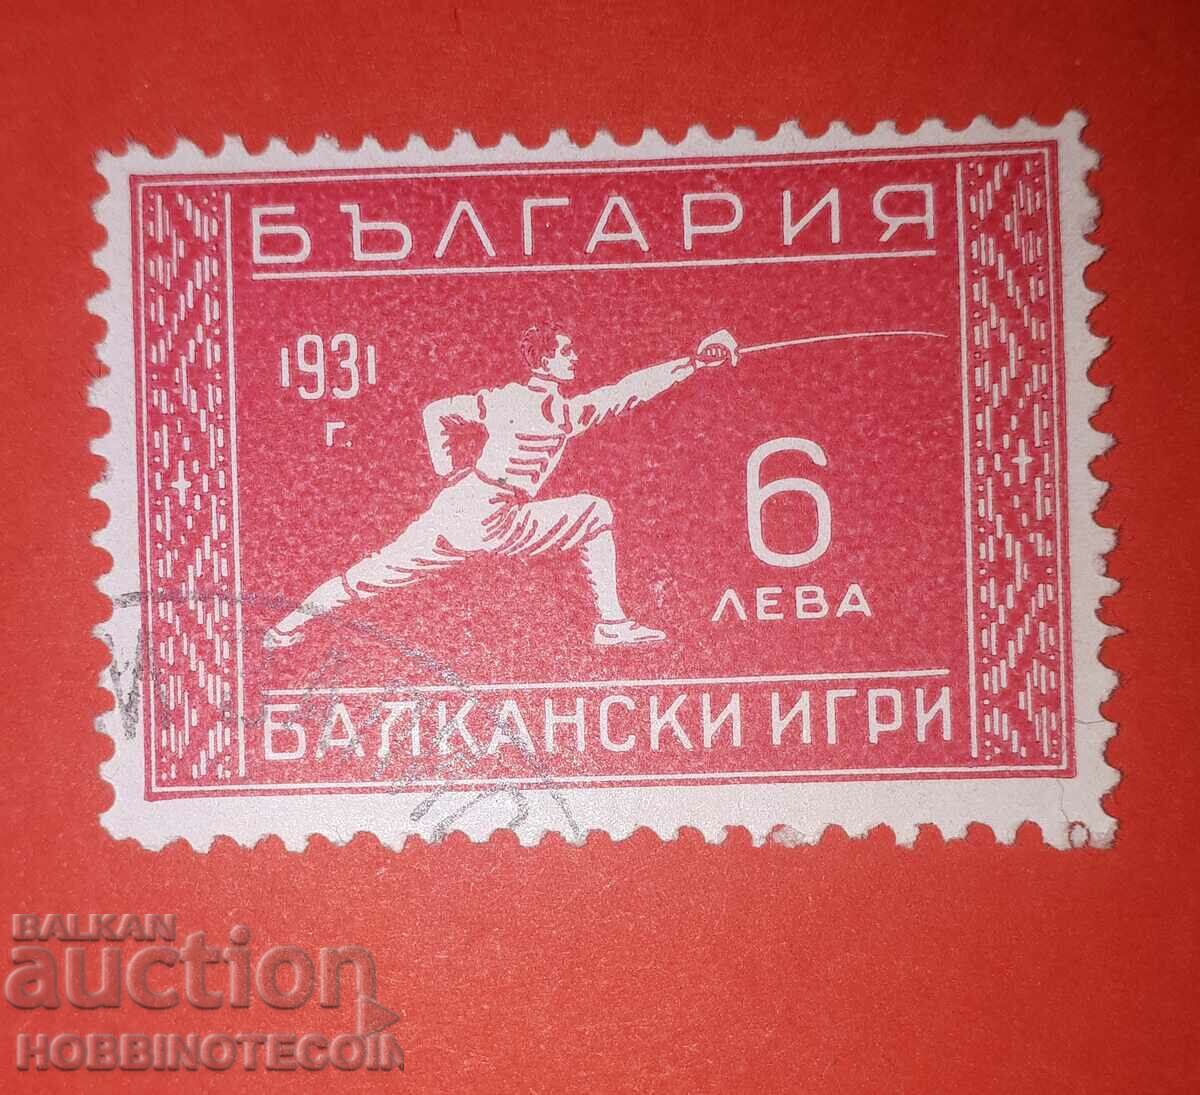 2 II BALKAN GAMES SECOND BALKANIAD BK272 6 BGN 1933 postmark1